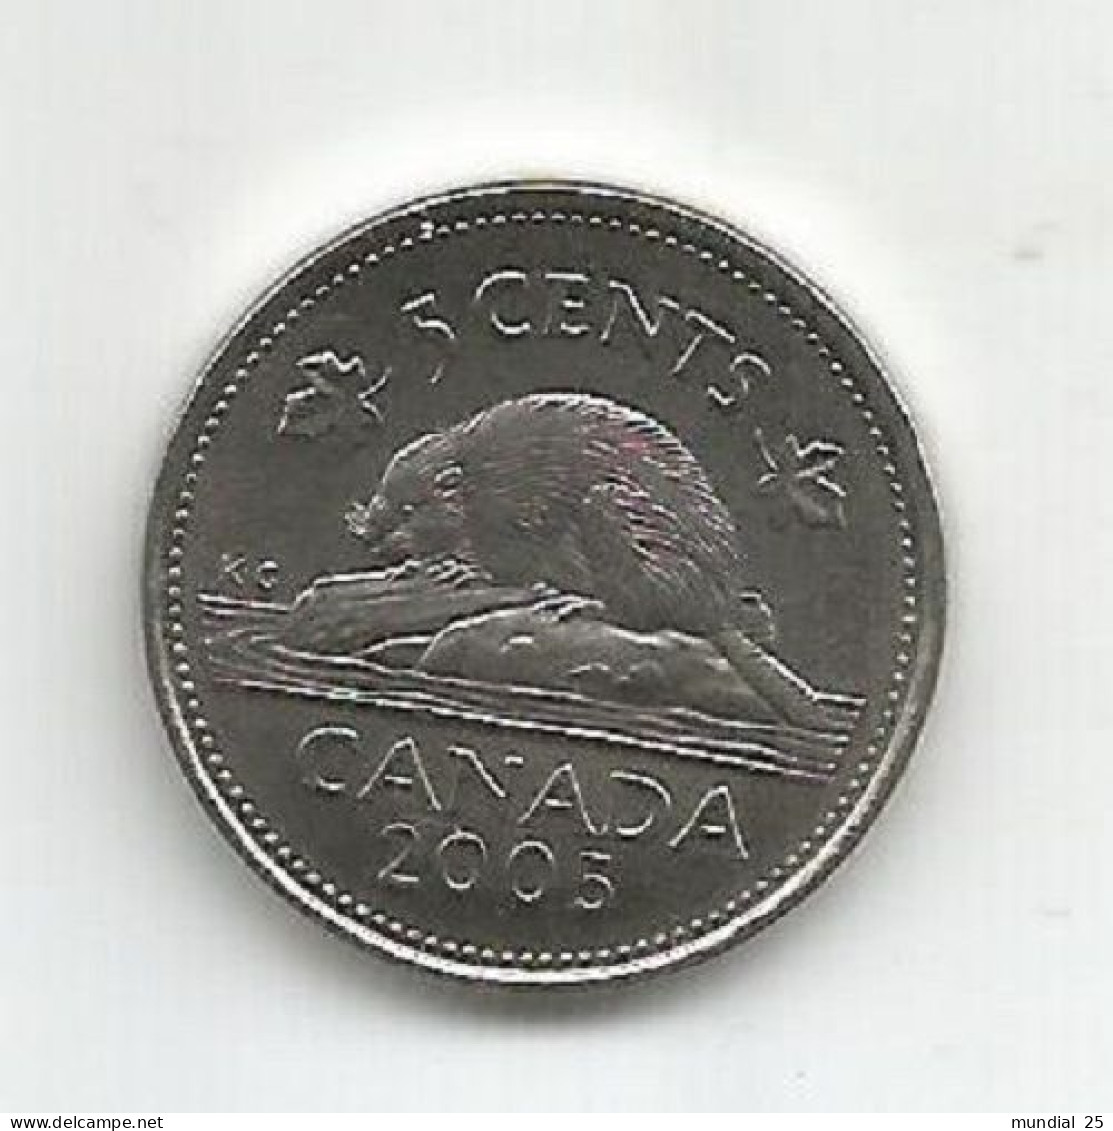 CANADA 5 CENTS 2005 (P) - Canada